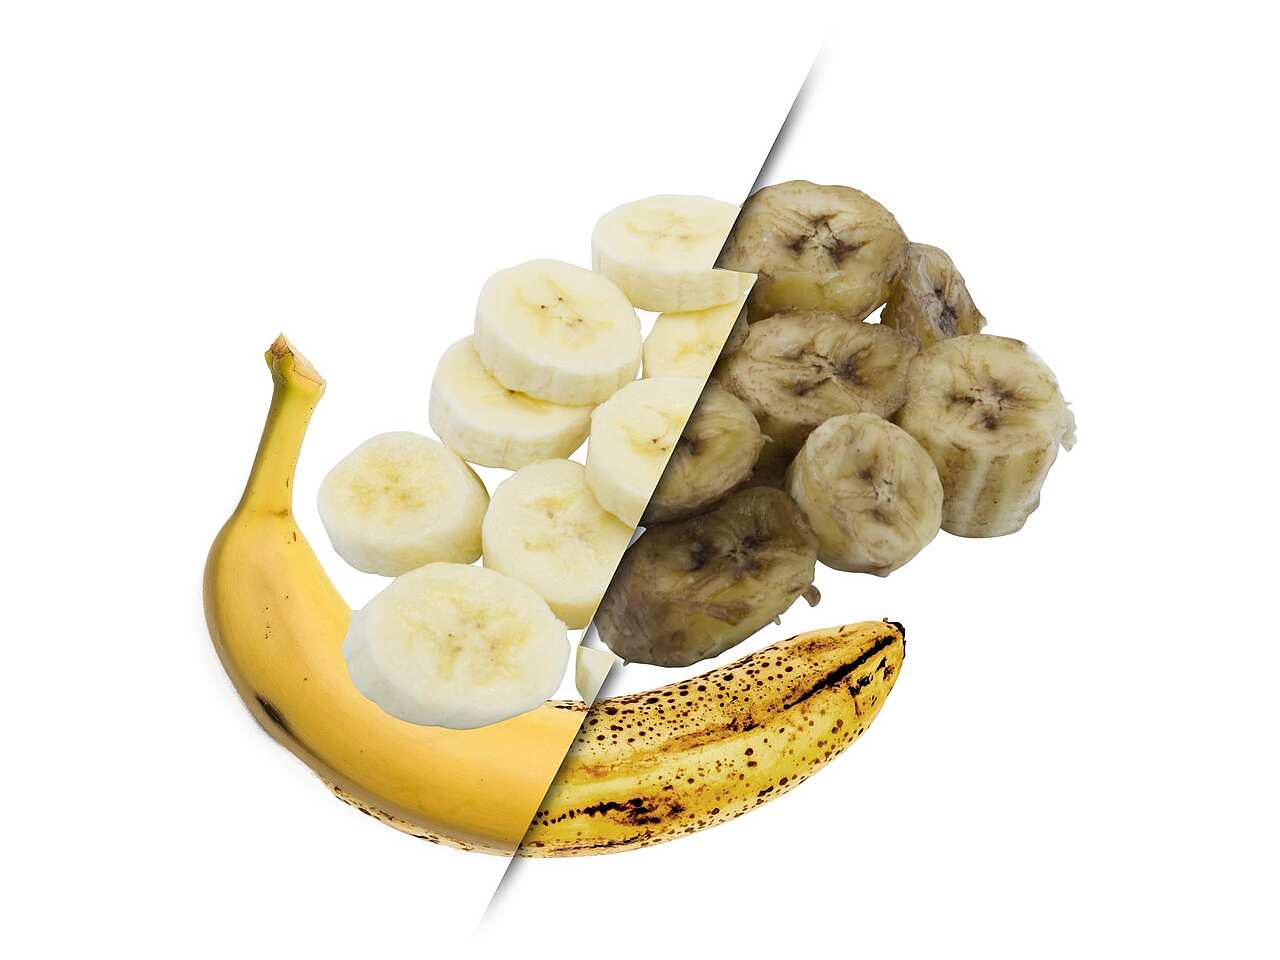 Fresh-Cut Banana treated with Food freshly vs. untreated